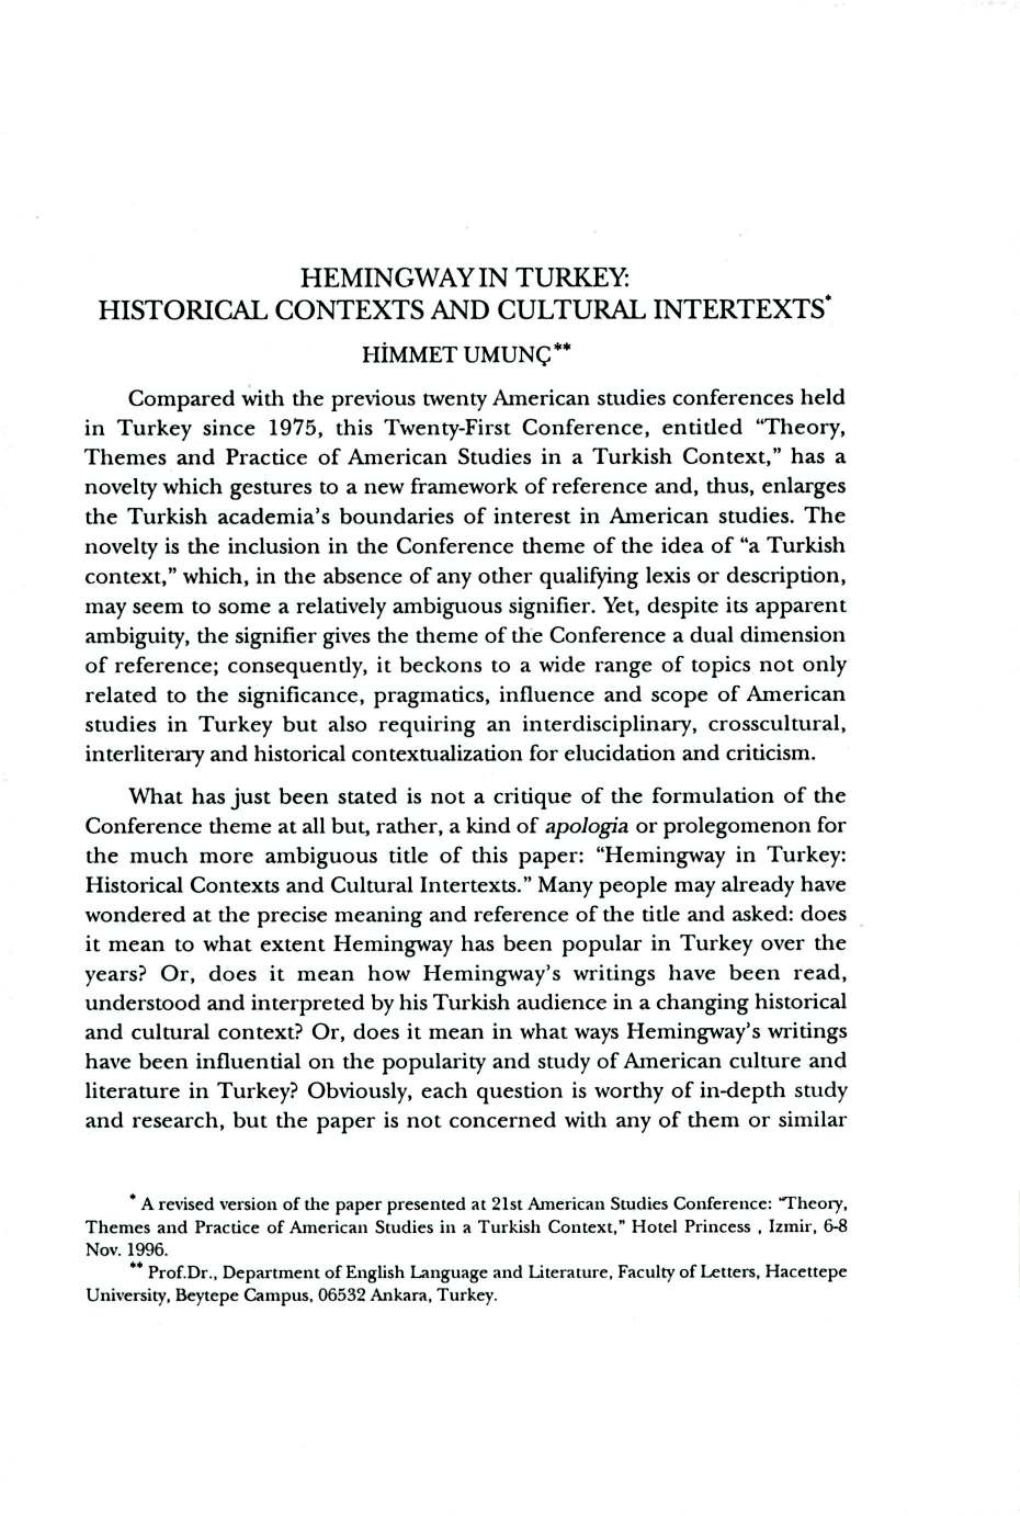 Historical Contexts and Cultural Intertexts